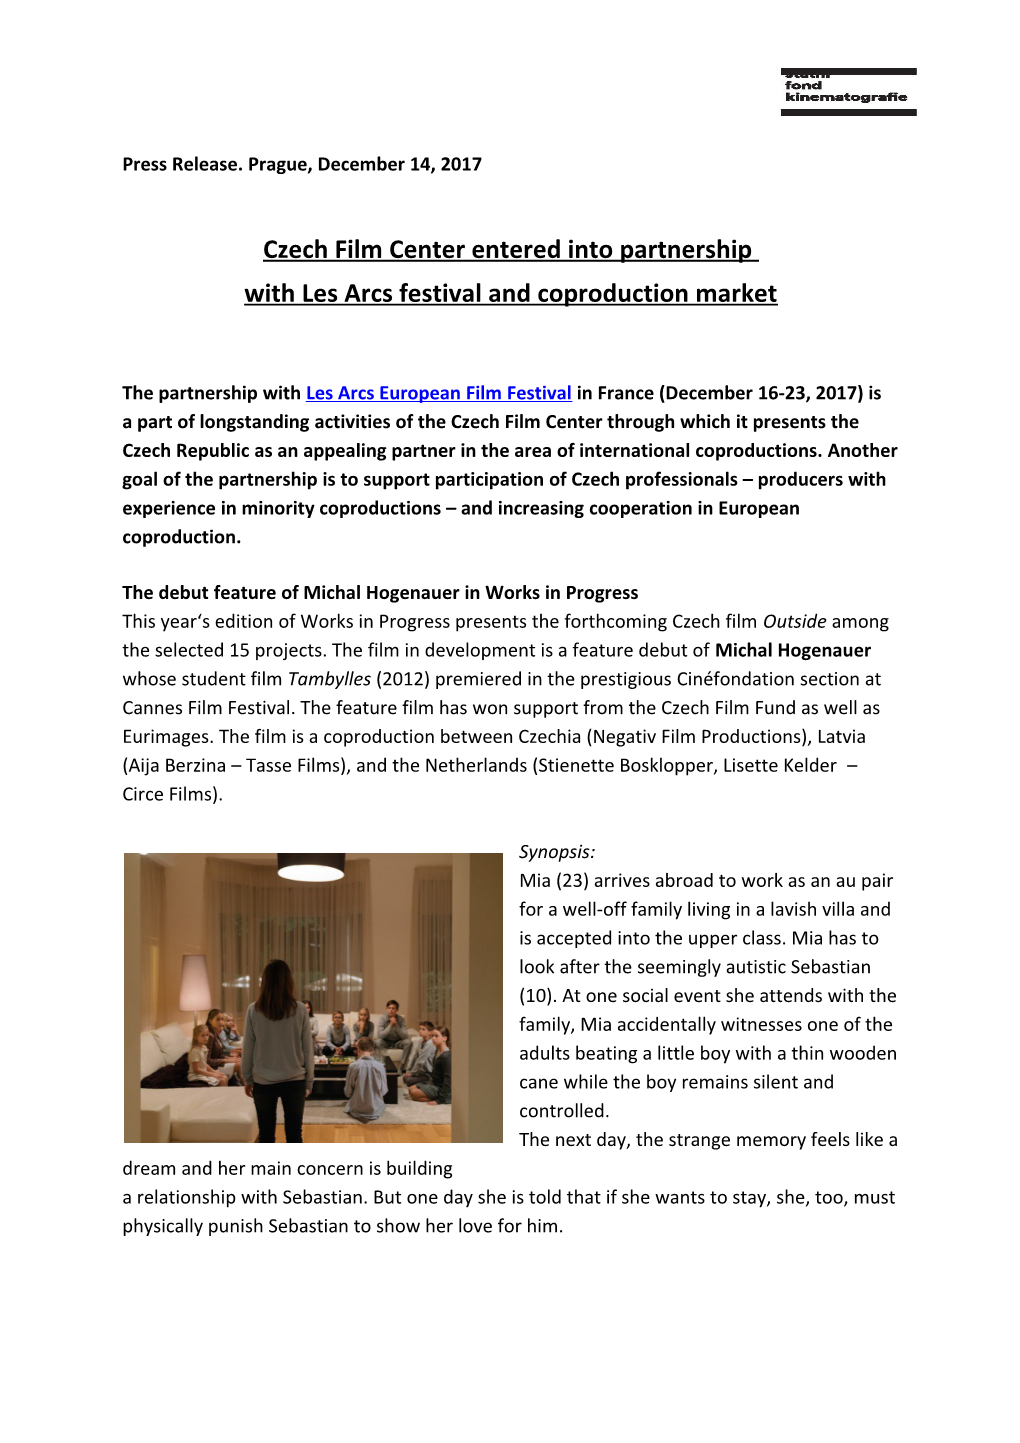 Czech Film Center Entered Into Partnership